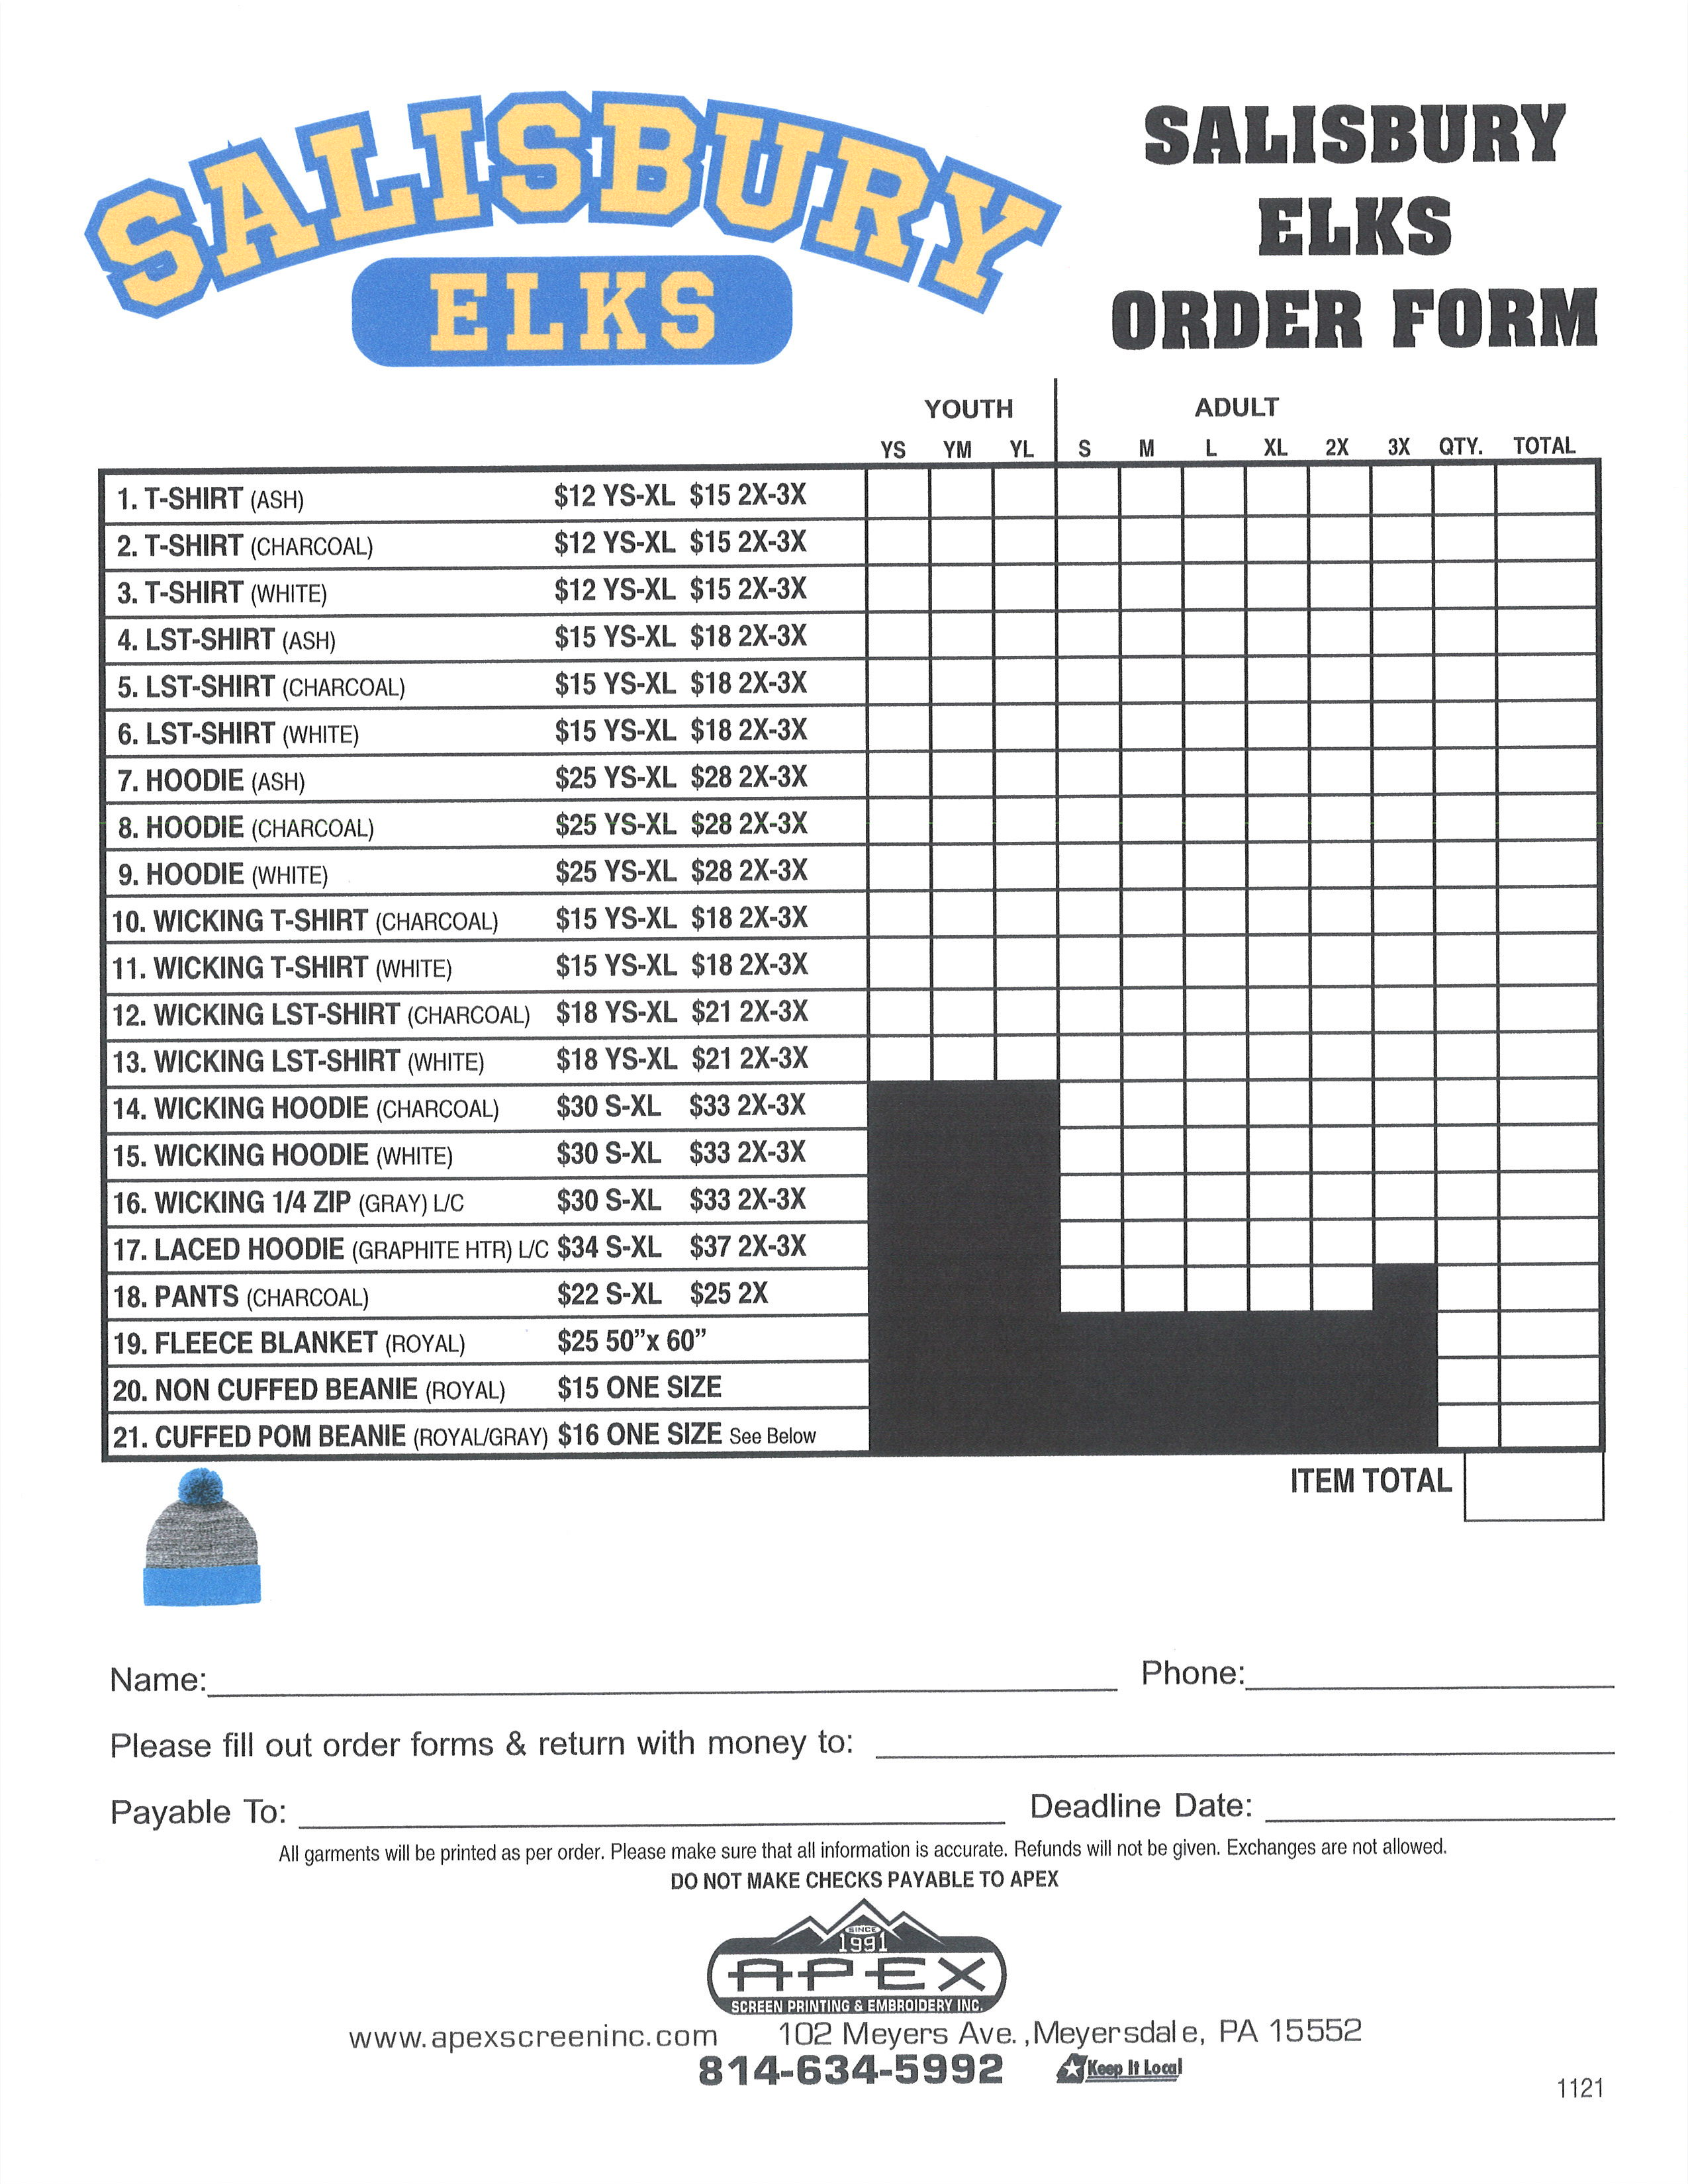 Elk lick order form